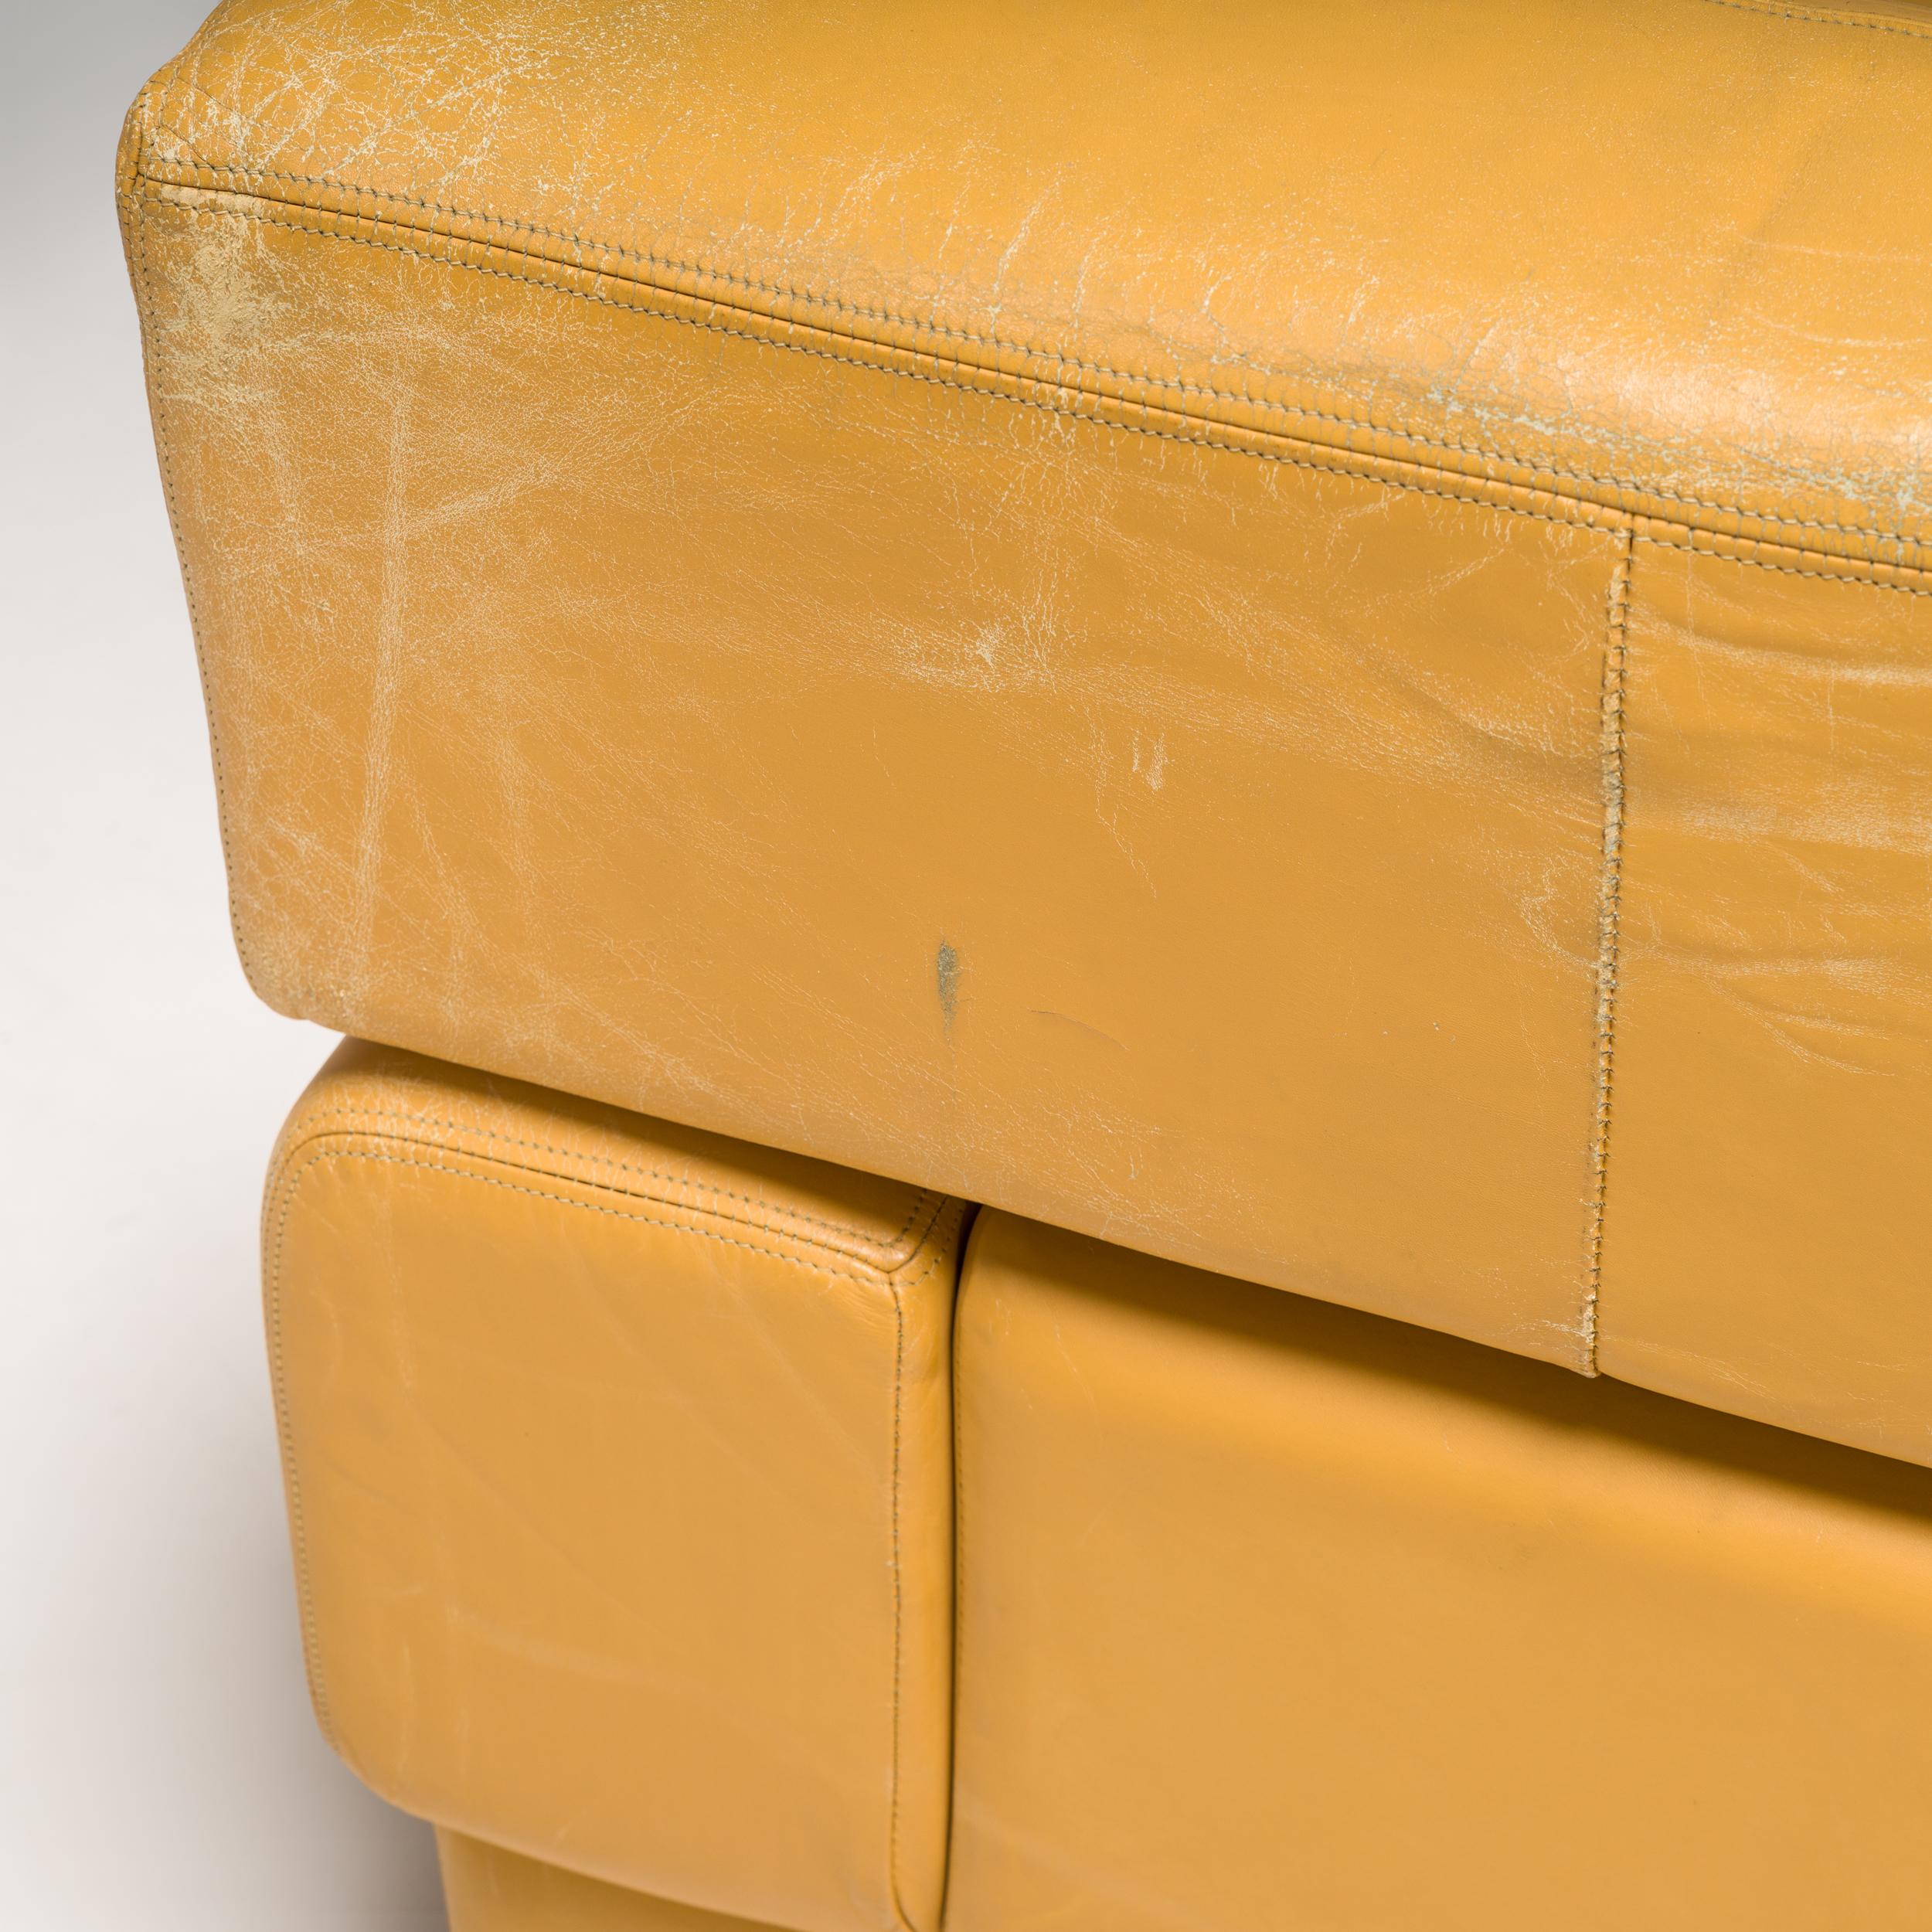 Percival Lafer Yellow Leather 2 Seat Sofa, circa 1960 For Sale 3